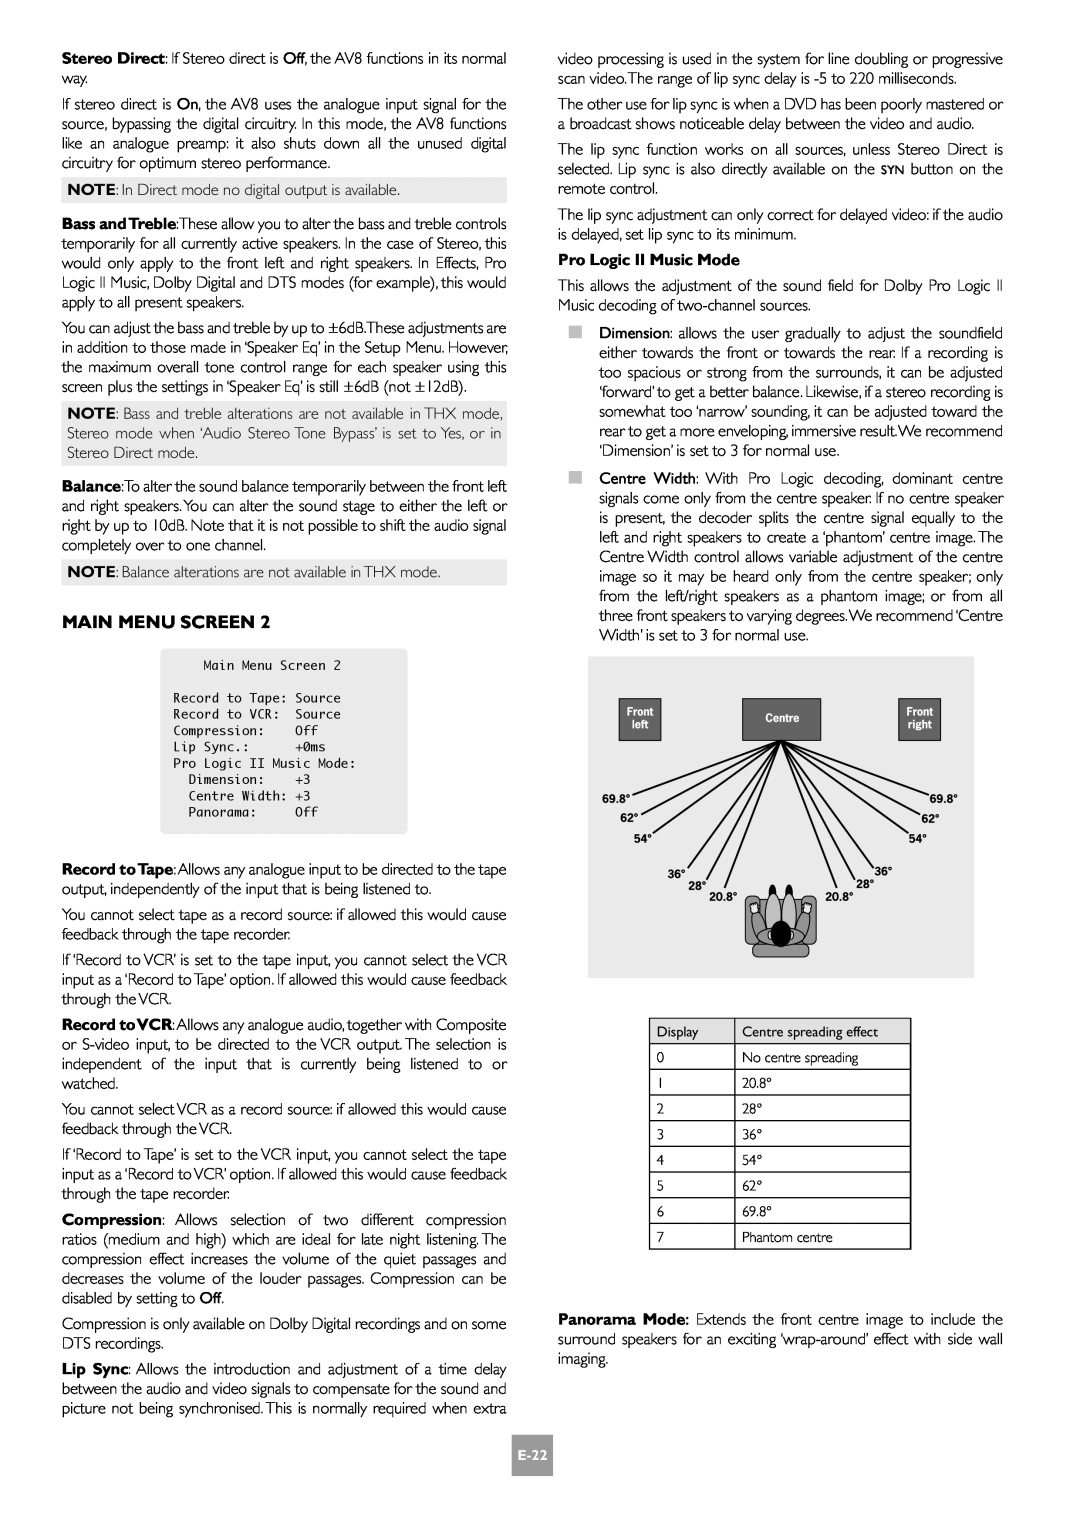 Arcam manual Main Menu Screen, Pro Logic II Music Mode, E-22 E-22 